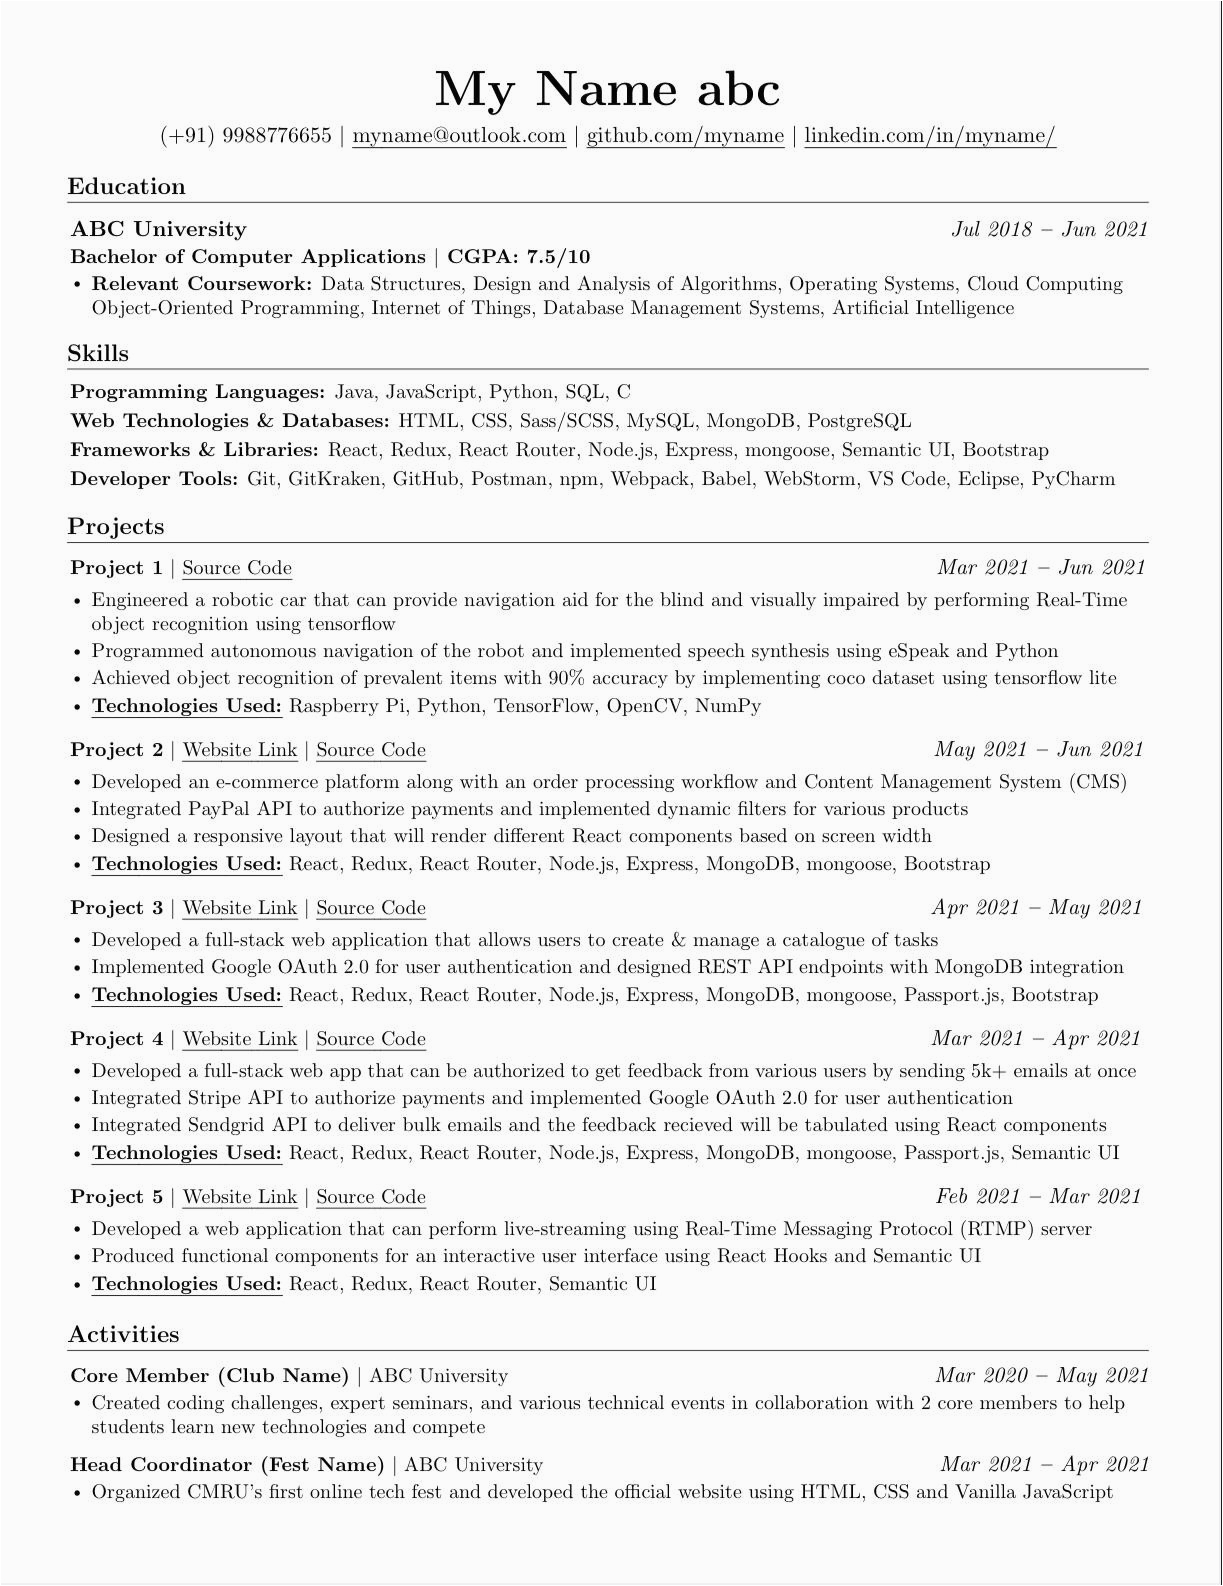 Sample Resume for Computer Science Fresh Graduate Reddit New Grad Resume Review Puter Science Resumes